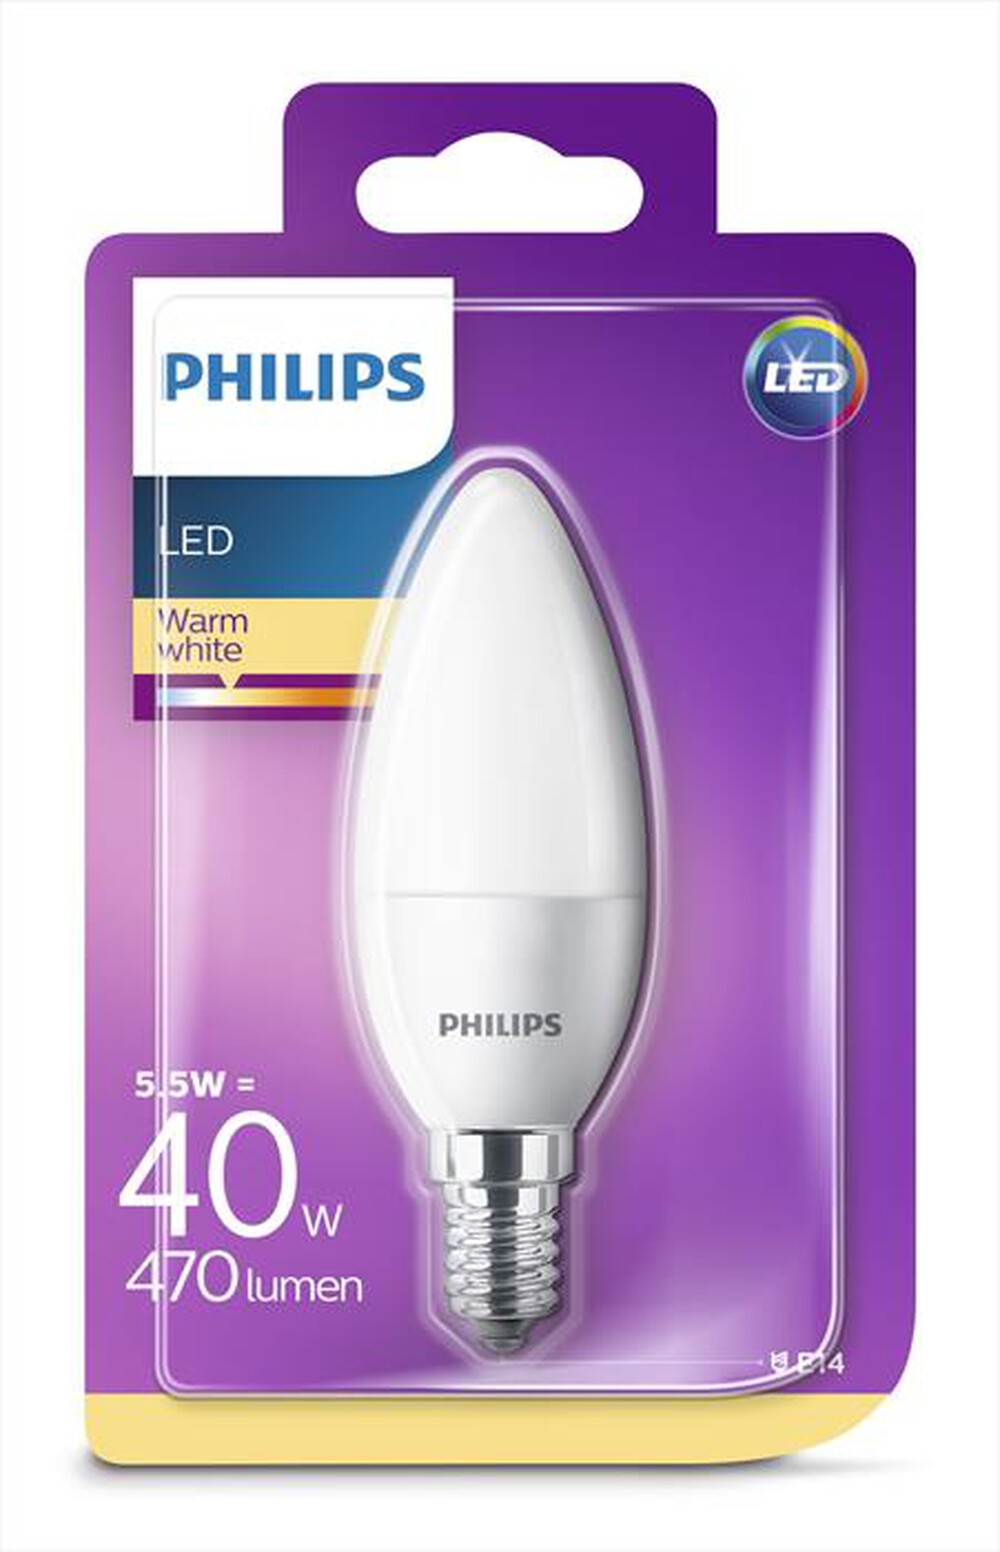 "PHILIPS - LEDOL40SM 5,5W E14-Luce bianca calda"